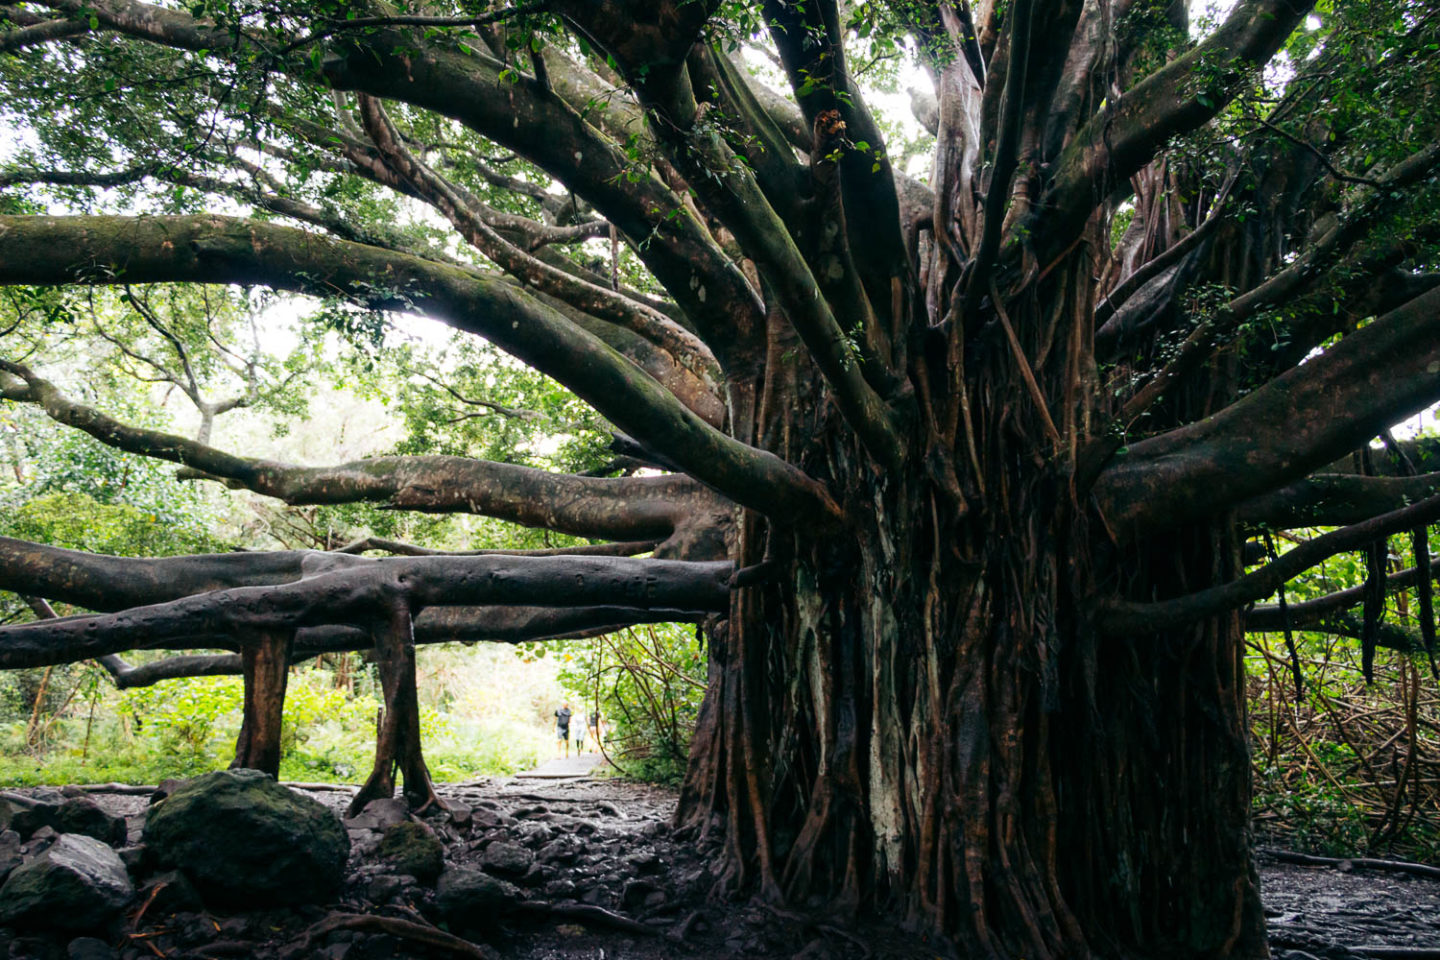 Giant banyan tree, Maui - Roads and Destinations